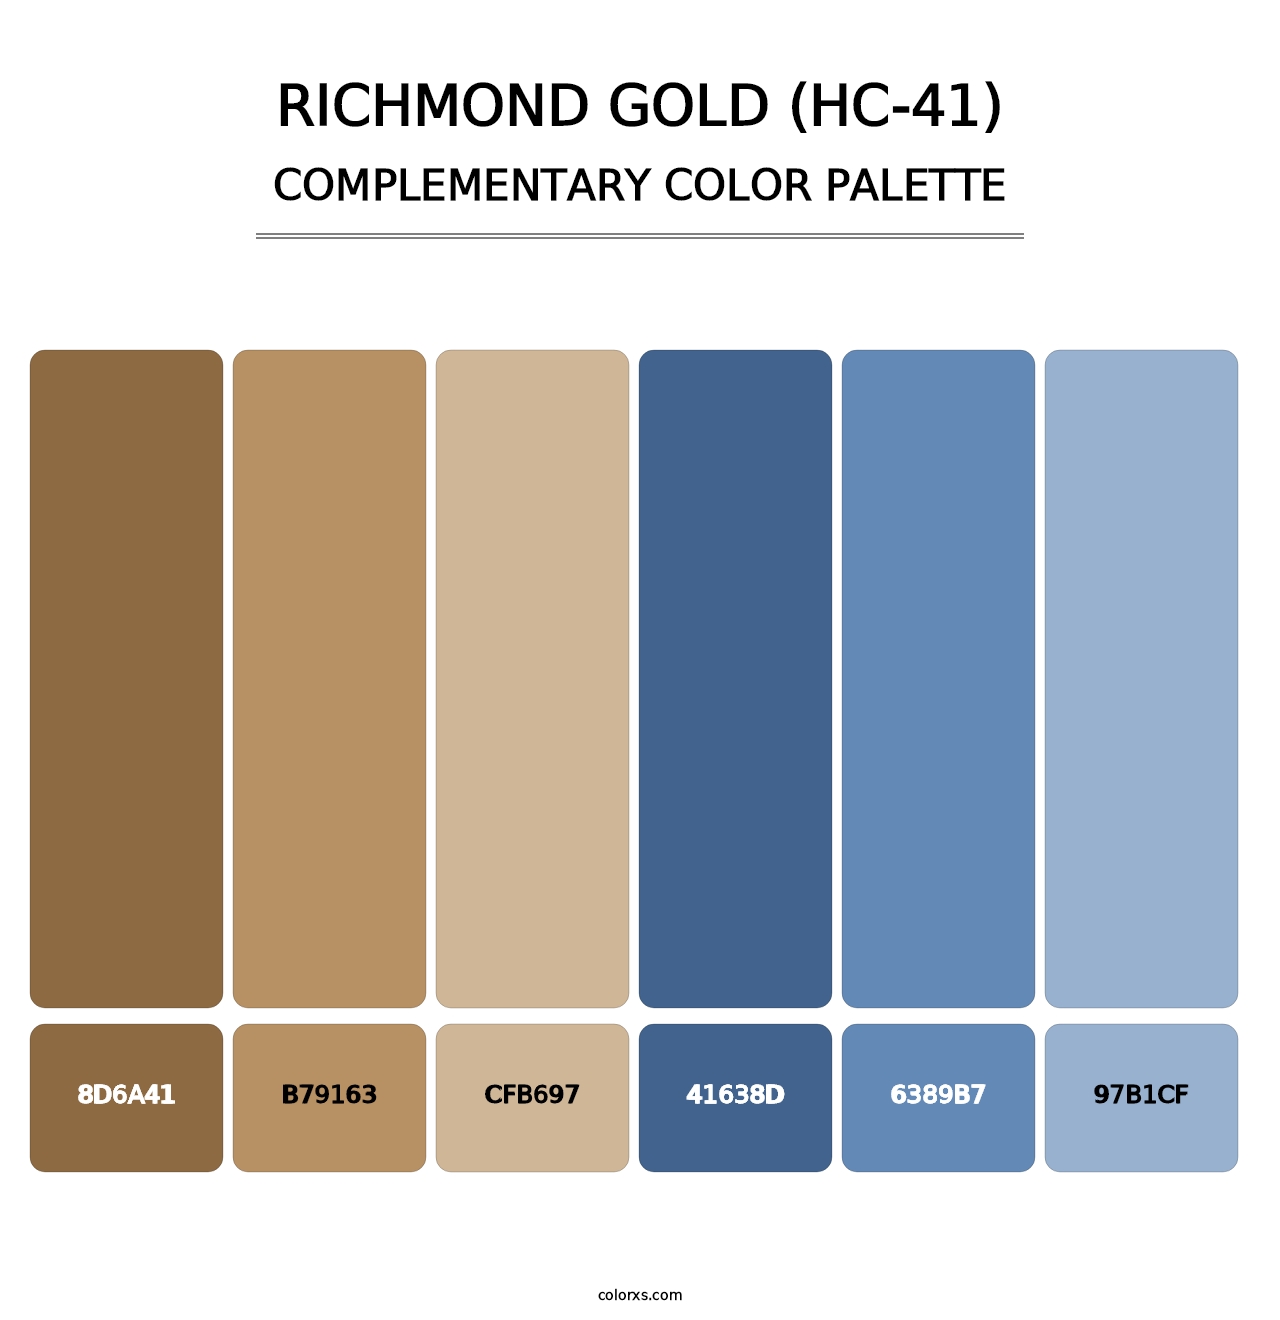 Richmond Gold (HC-41) - Complementary Color Palette